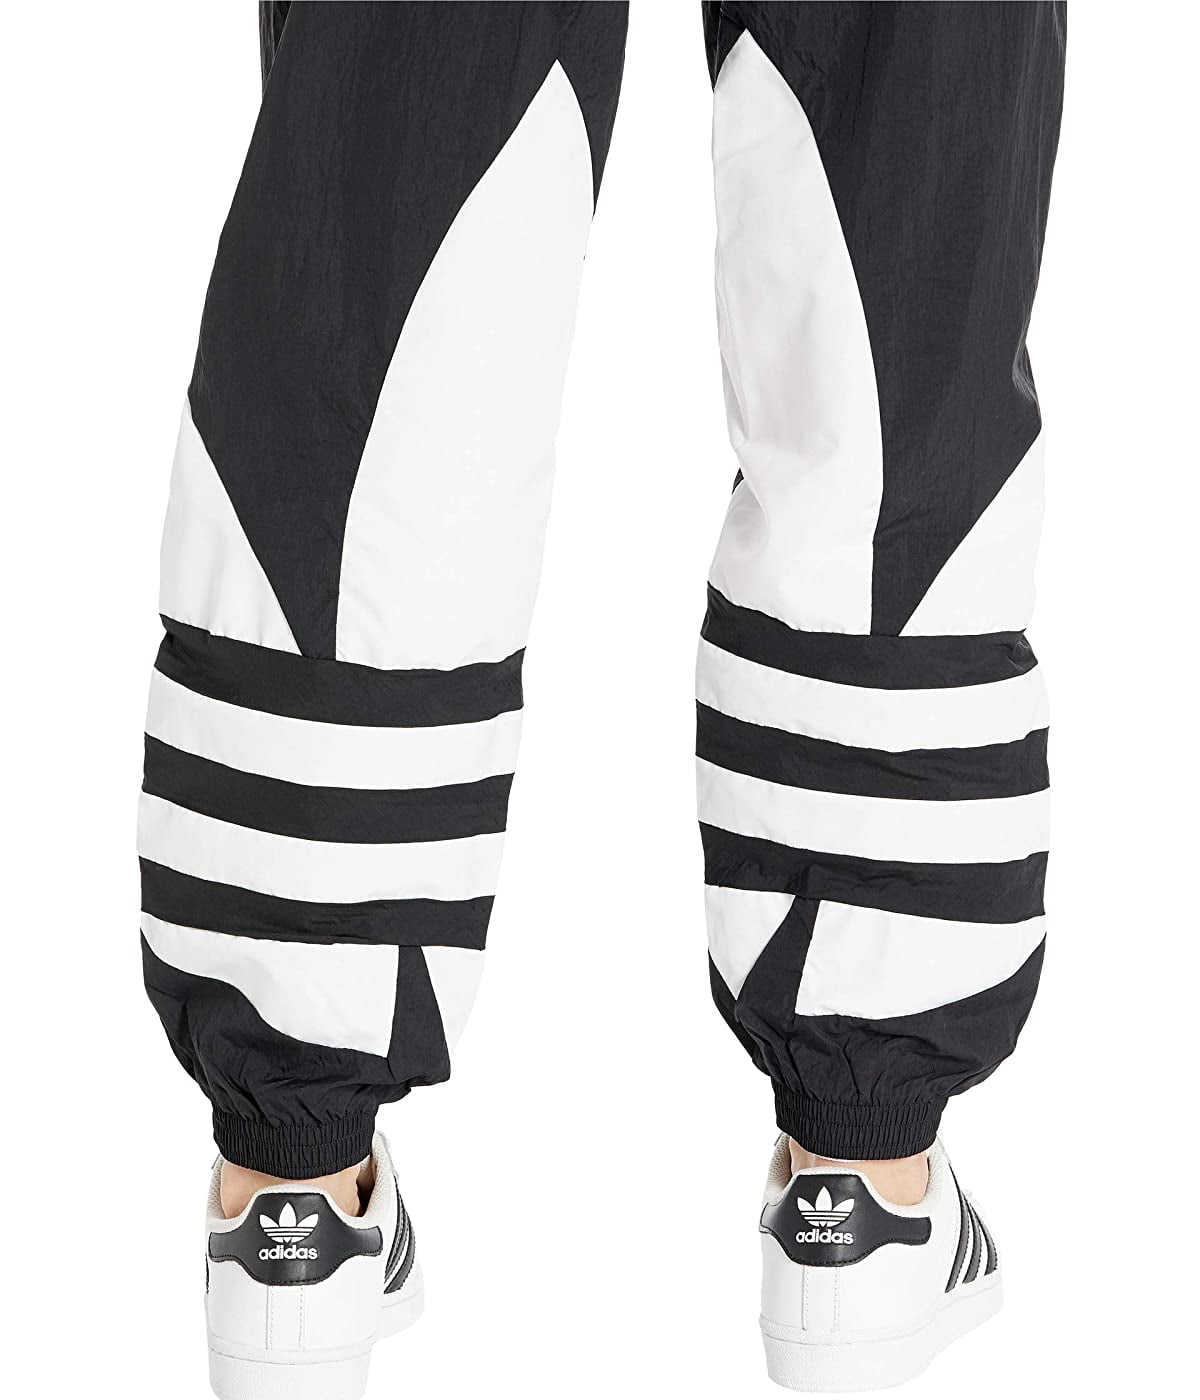 Immersion Towards Insanity adidas Originals Large Logo Track Pants Black/White - Walmart.com